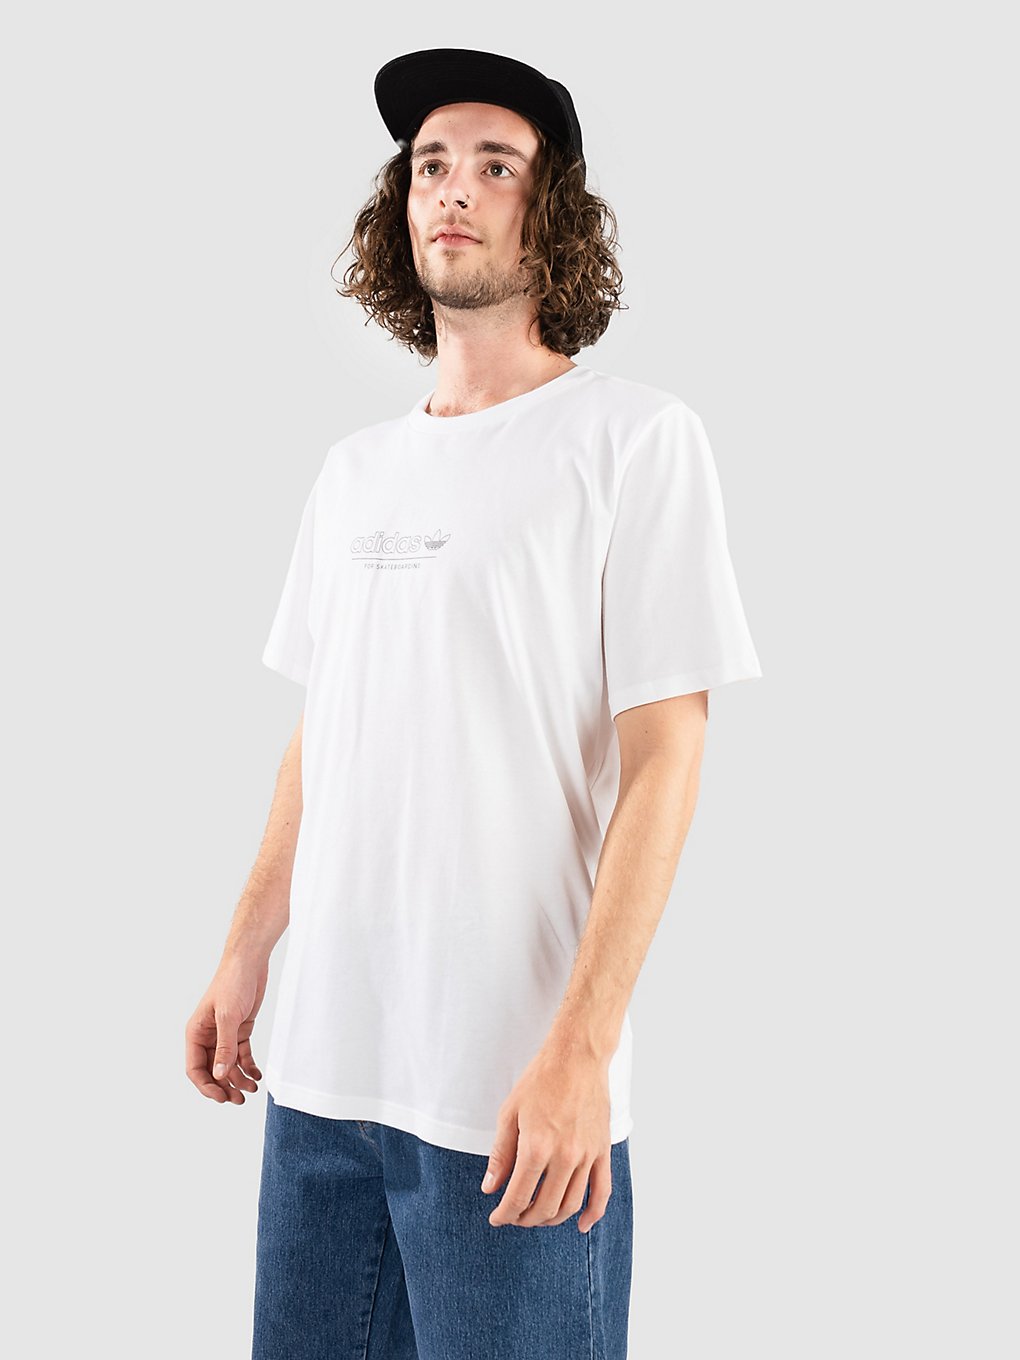 adidas Skateboarding 4.0 Strike T-Shirt white kaufen